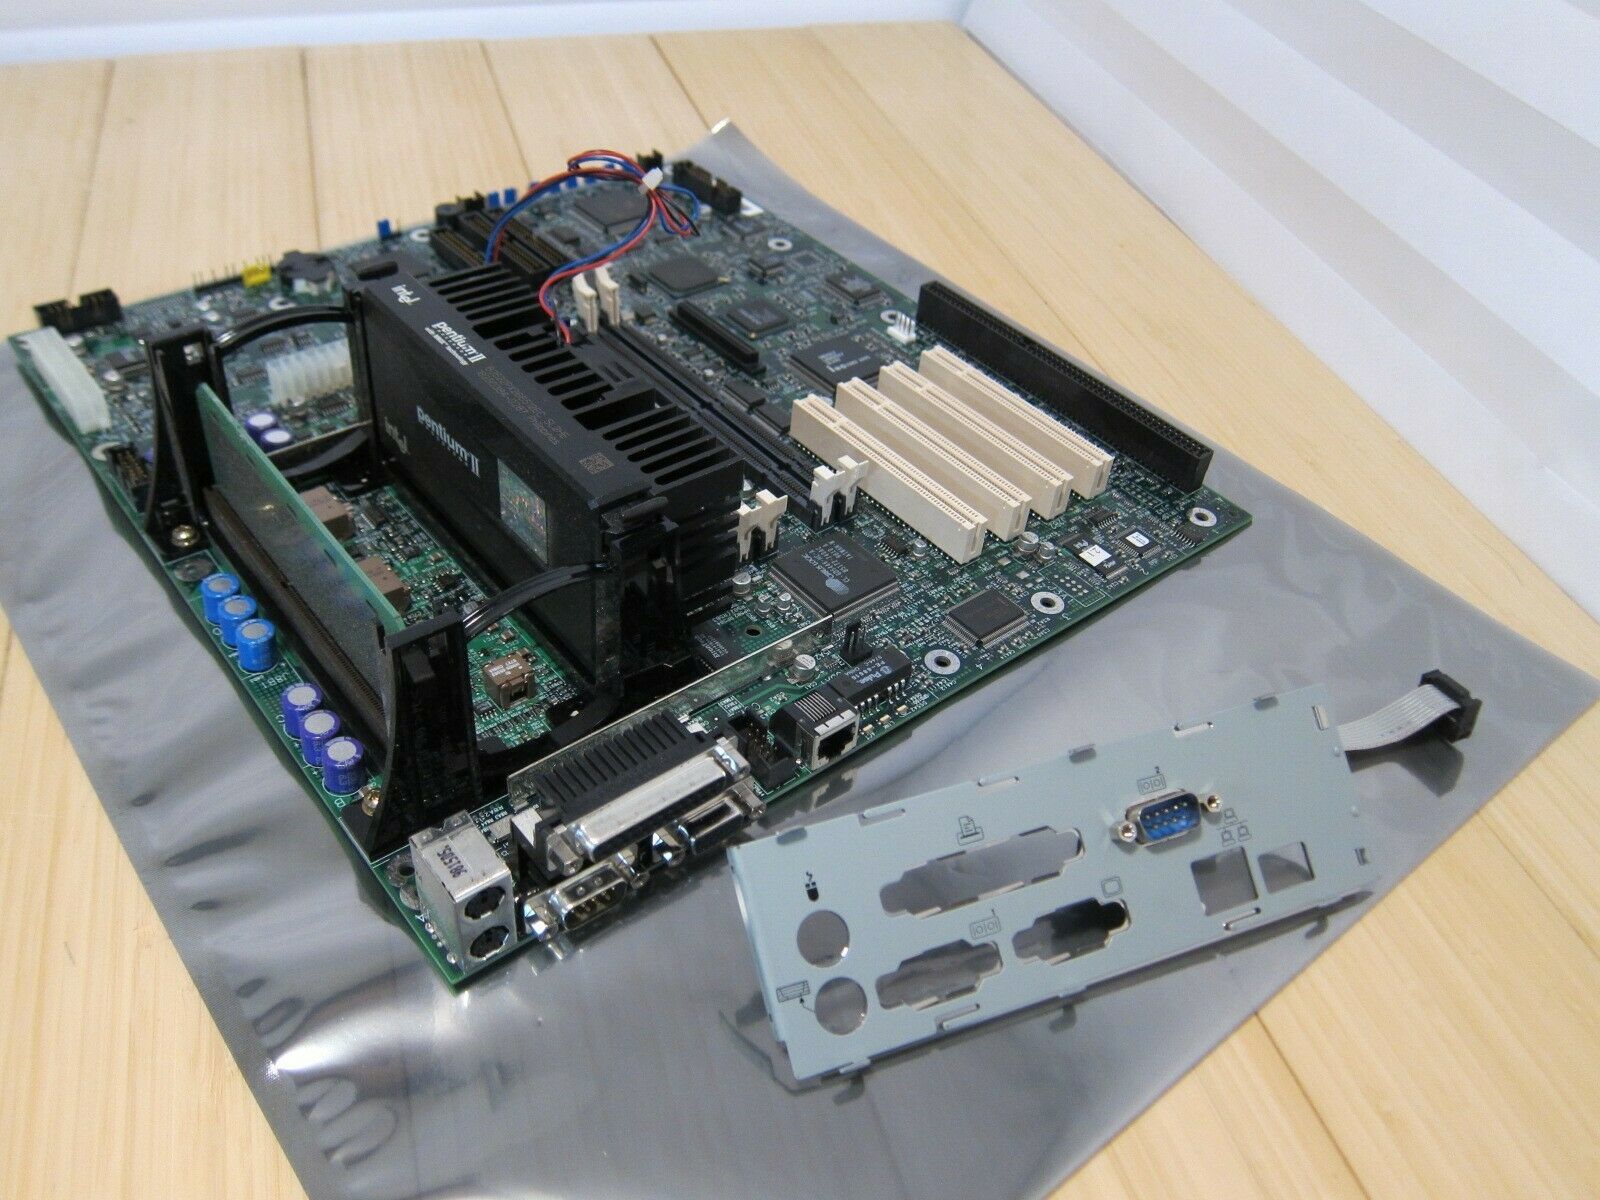 E13976 Dual Slot Motherboard with single Intel Pentium II 266 & 32MB RAM - $121.54